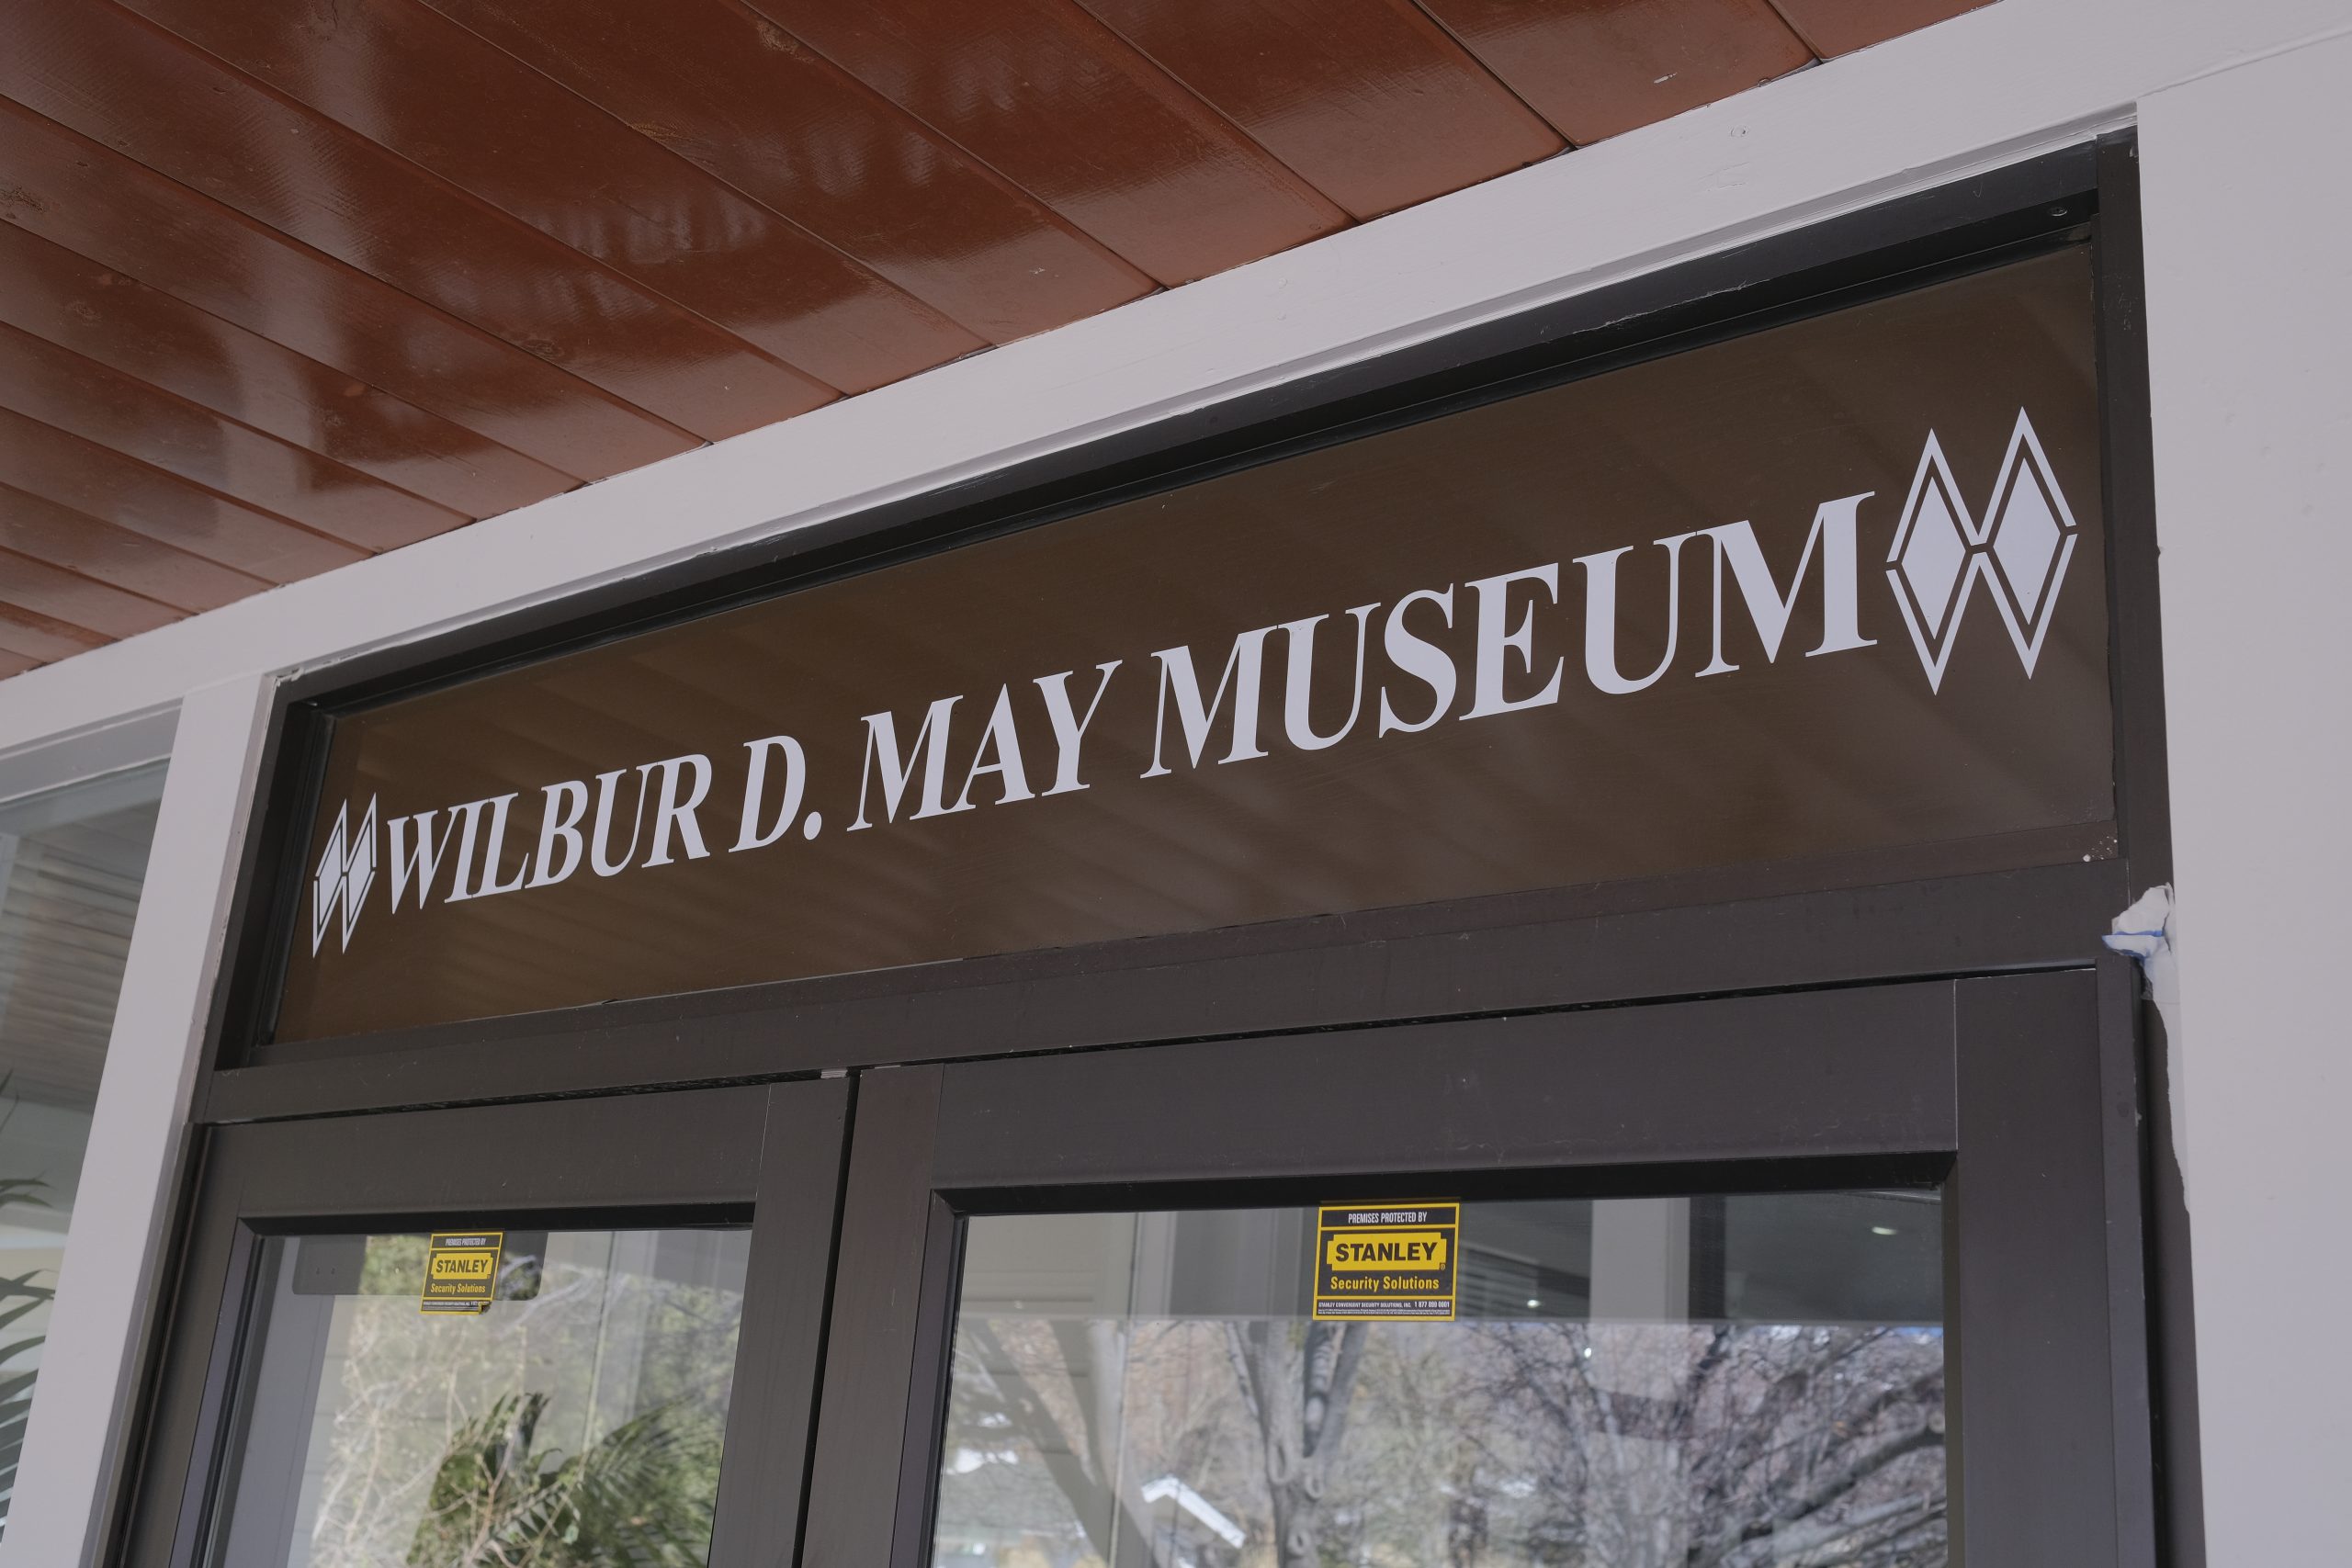 Wilbur D May Museum entrance sign